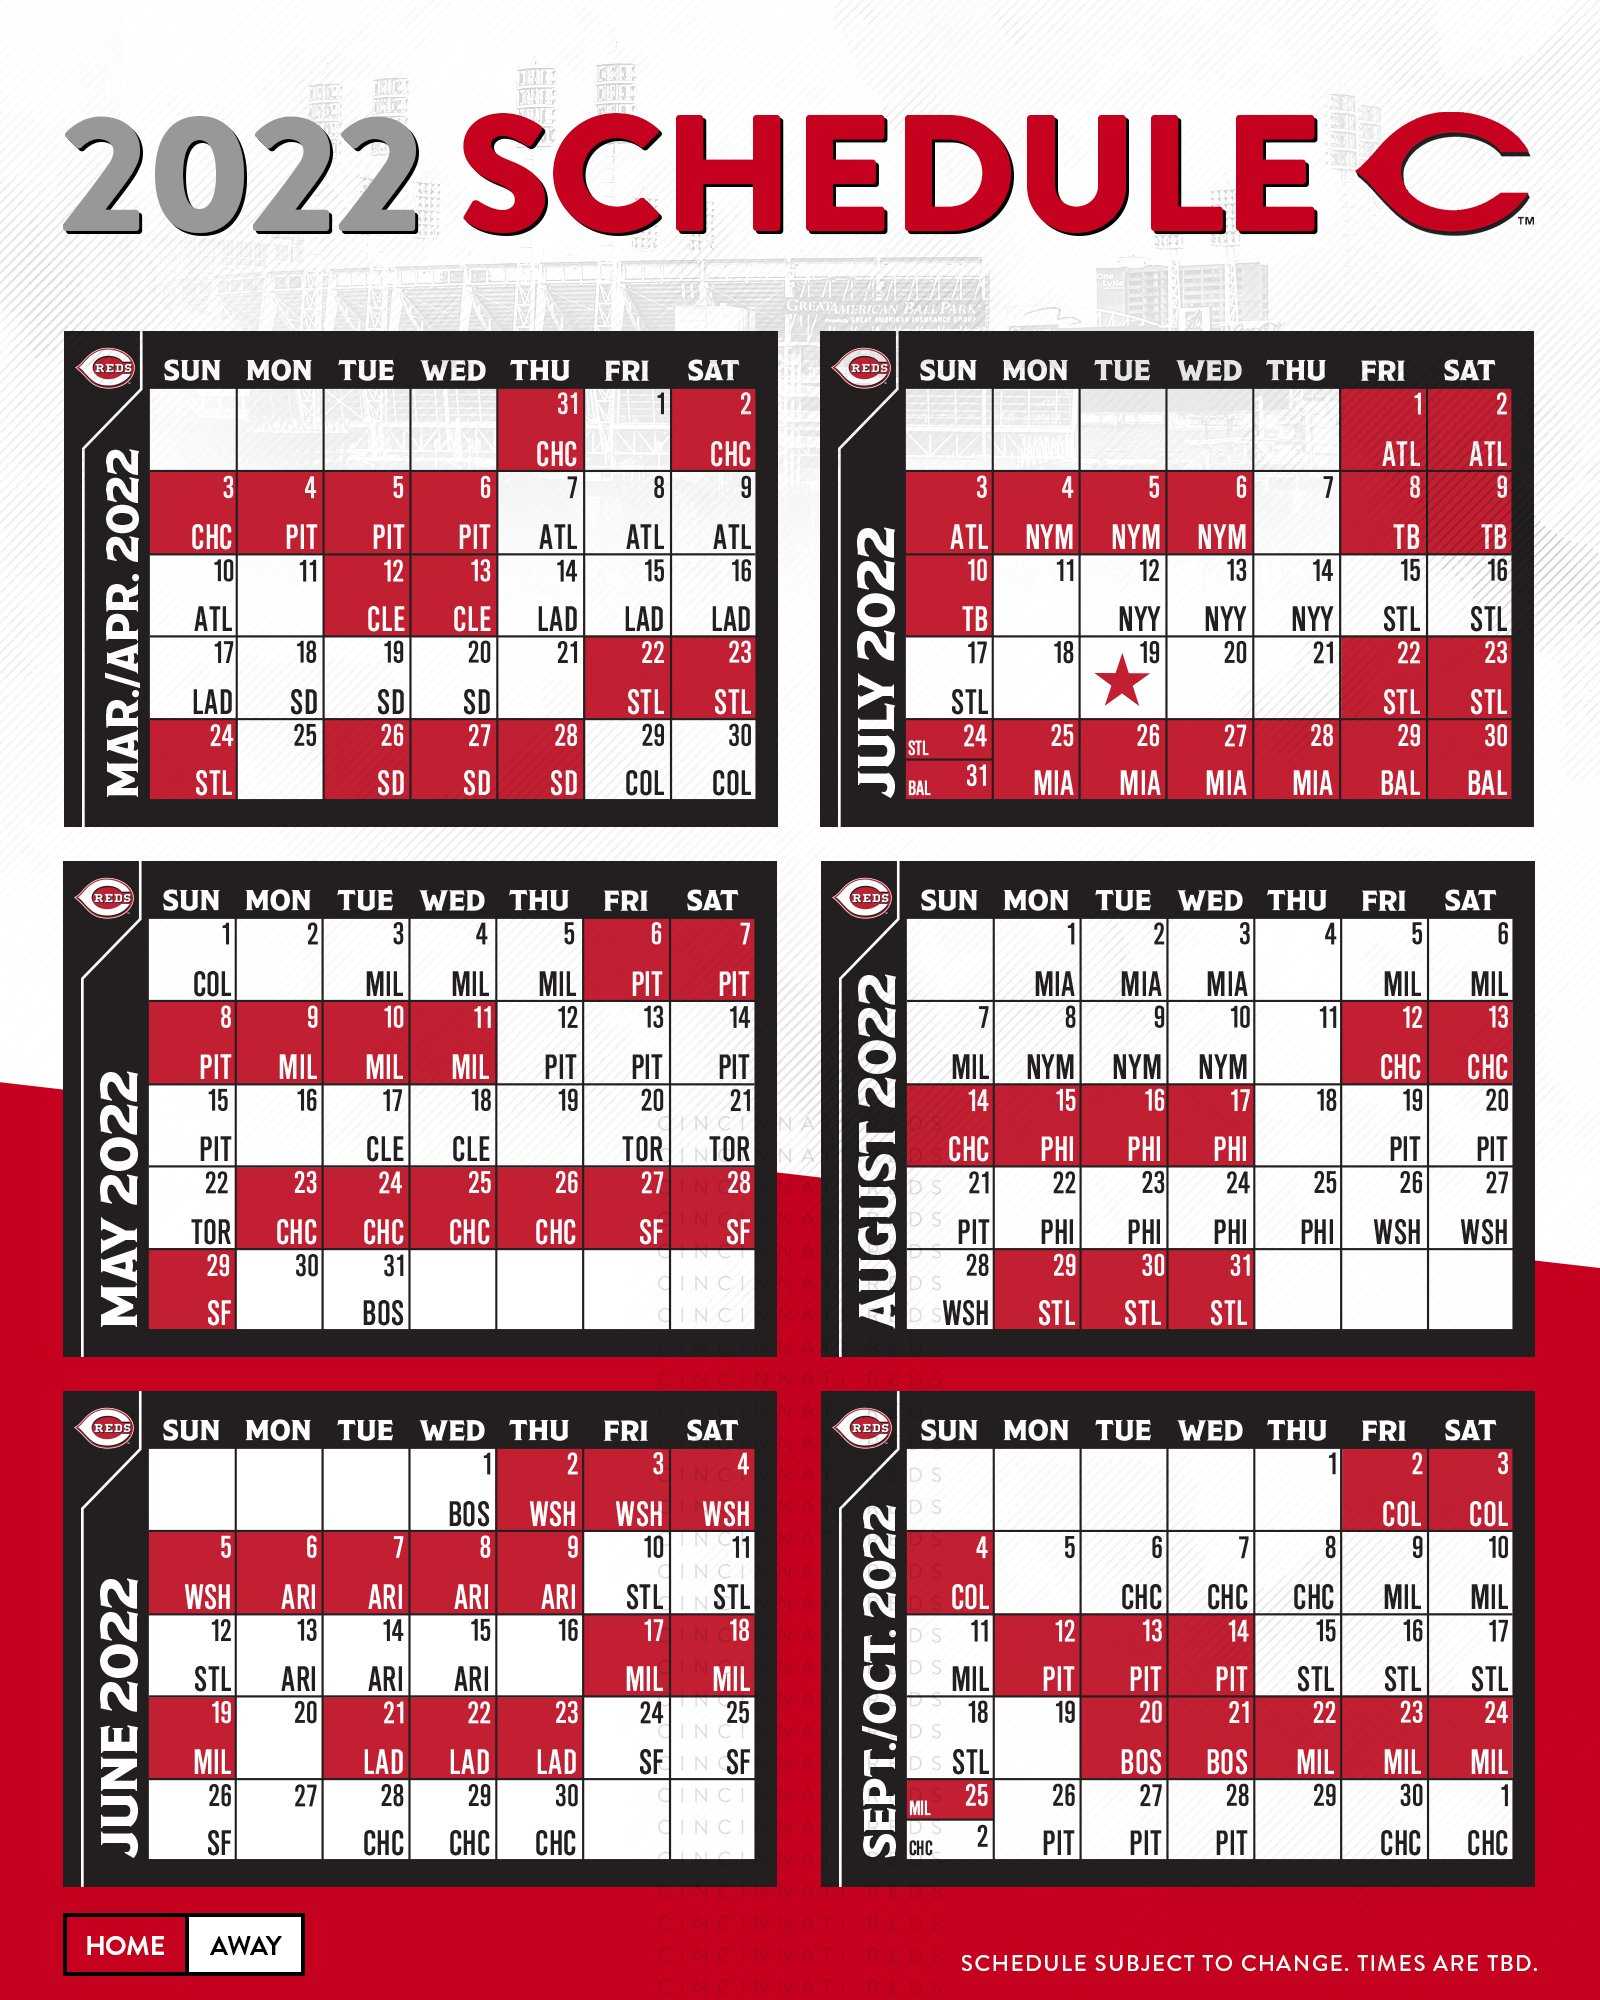 Minnesota Twins 2022 Schedule Cincinnati Reds Release 2022 Schedule: Here Are The Highlights